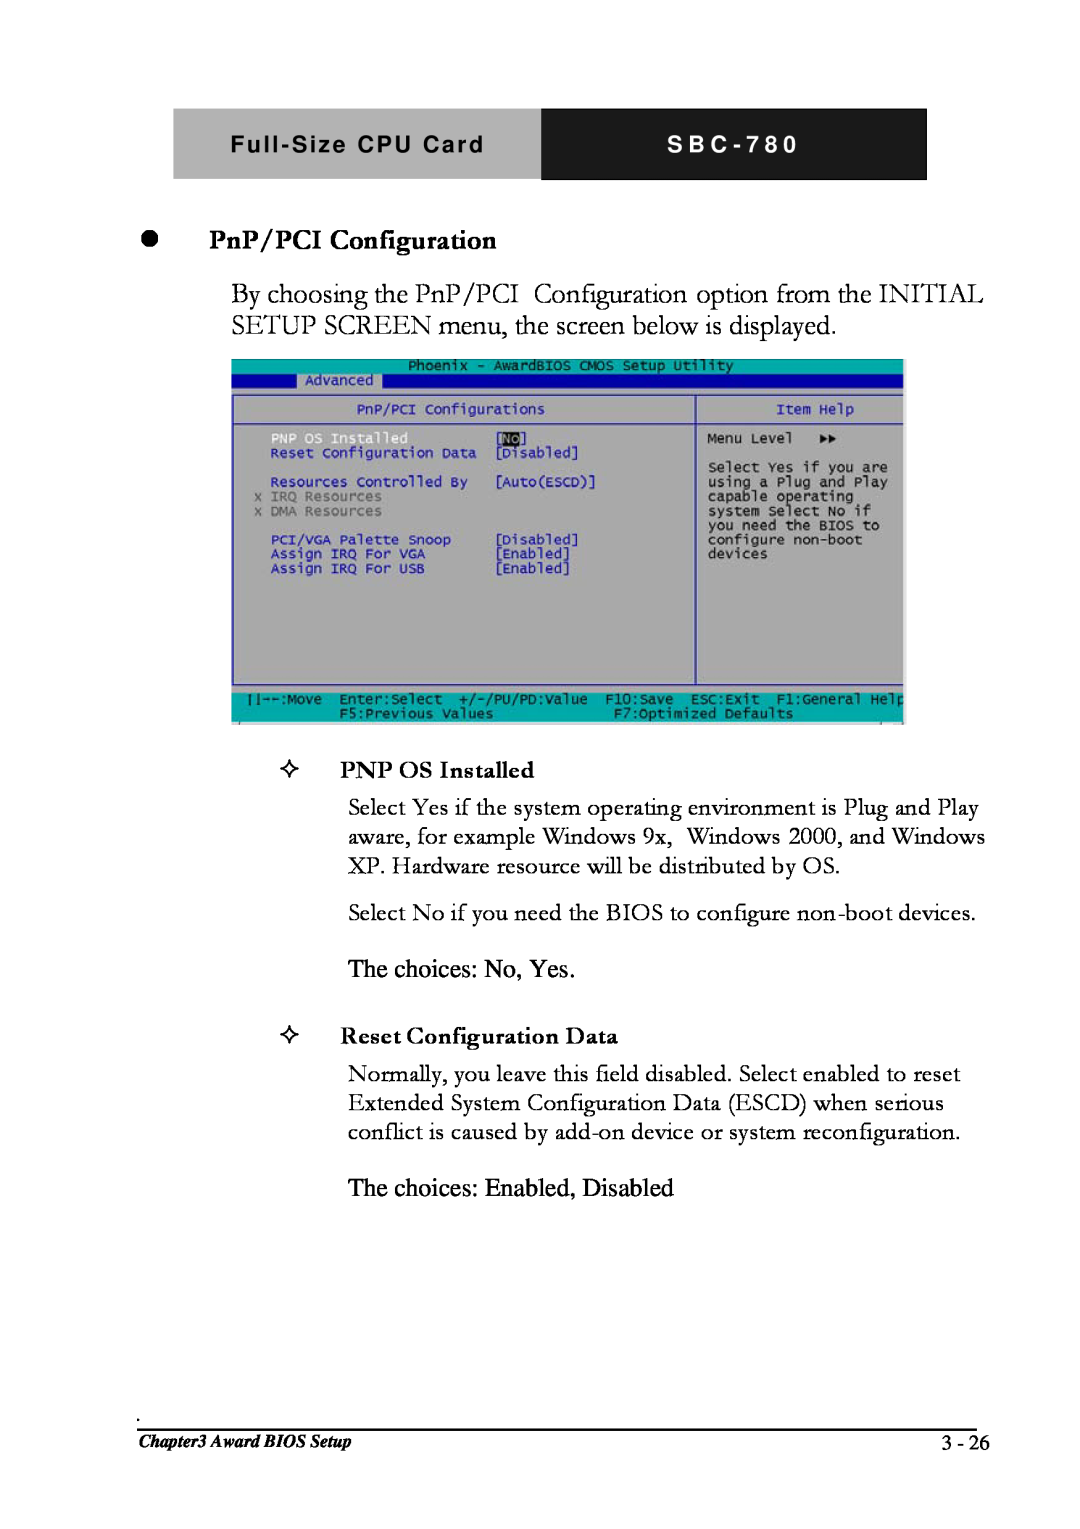 Intel SBC-780 manual PnP/PCI Configuration, PNP OS Installed, Reset Configuration Data 